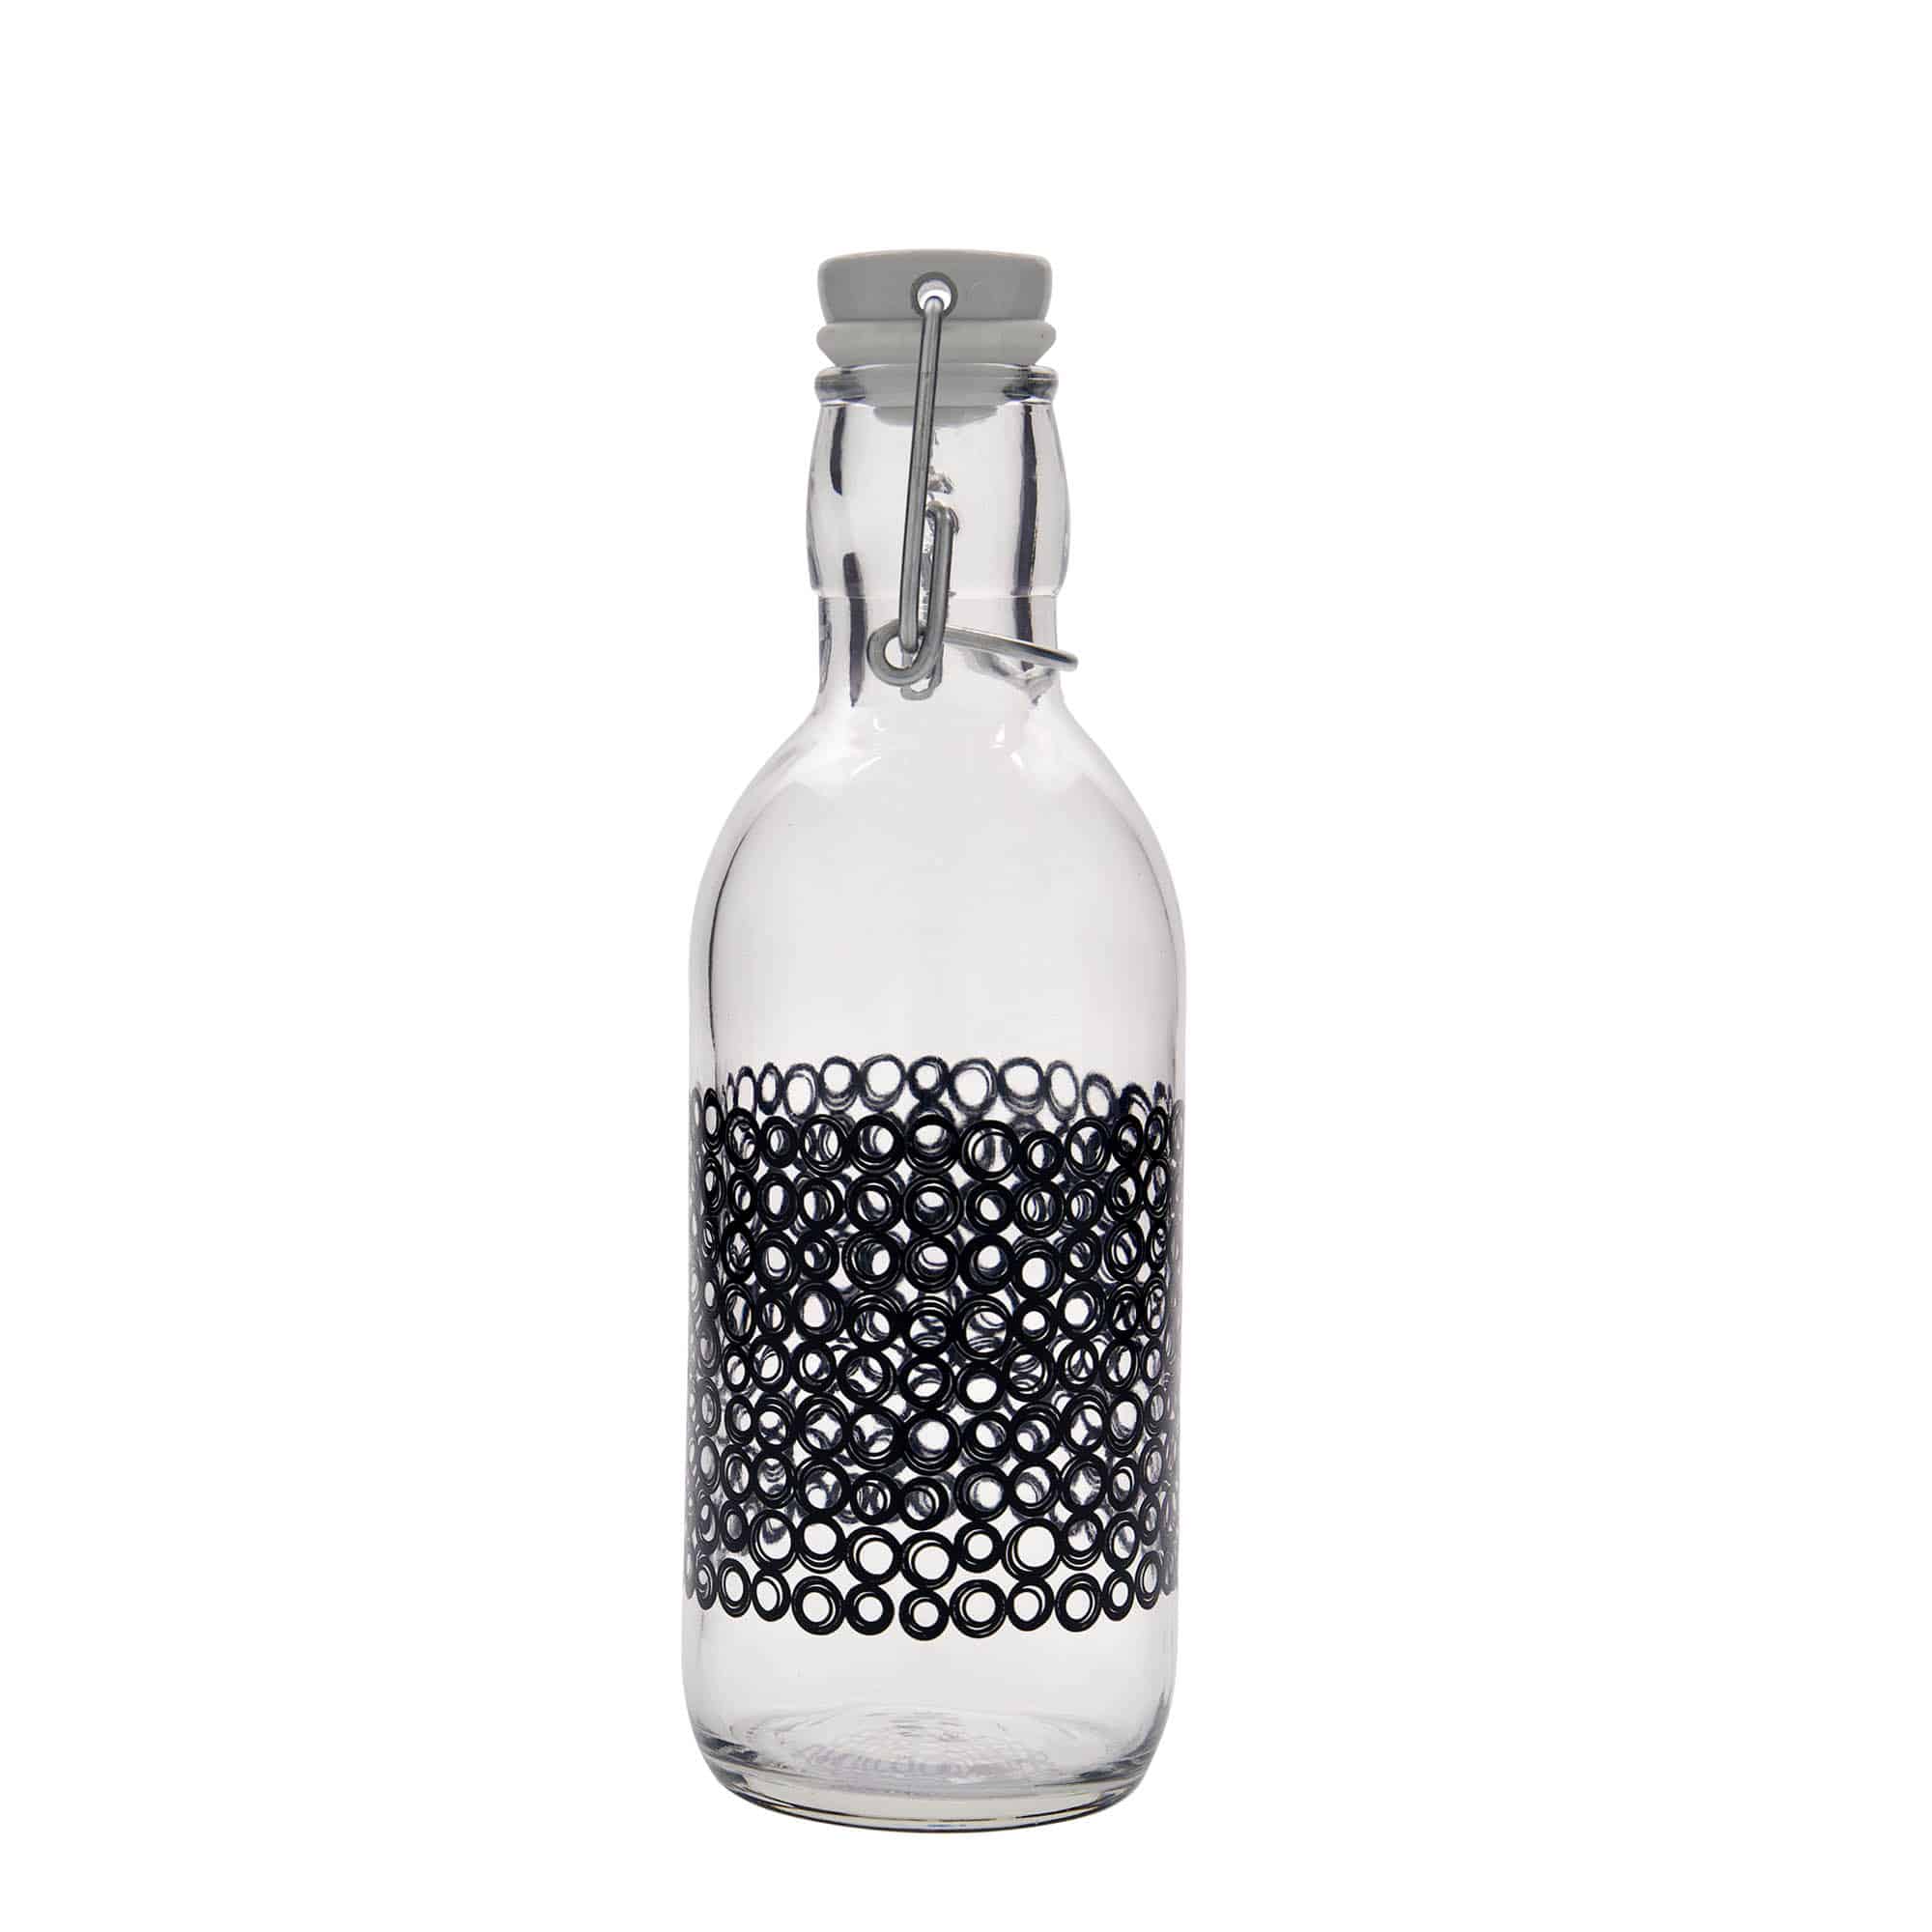 500 ml glasflaske 'Emilia', motiv: Circola nero, åbning: Patentlåg